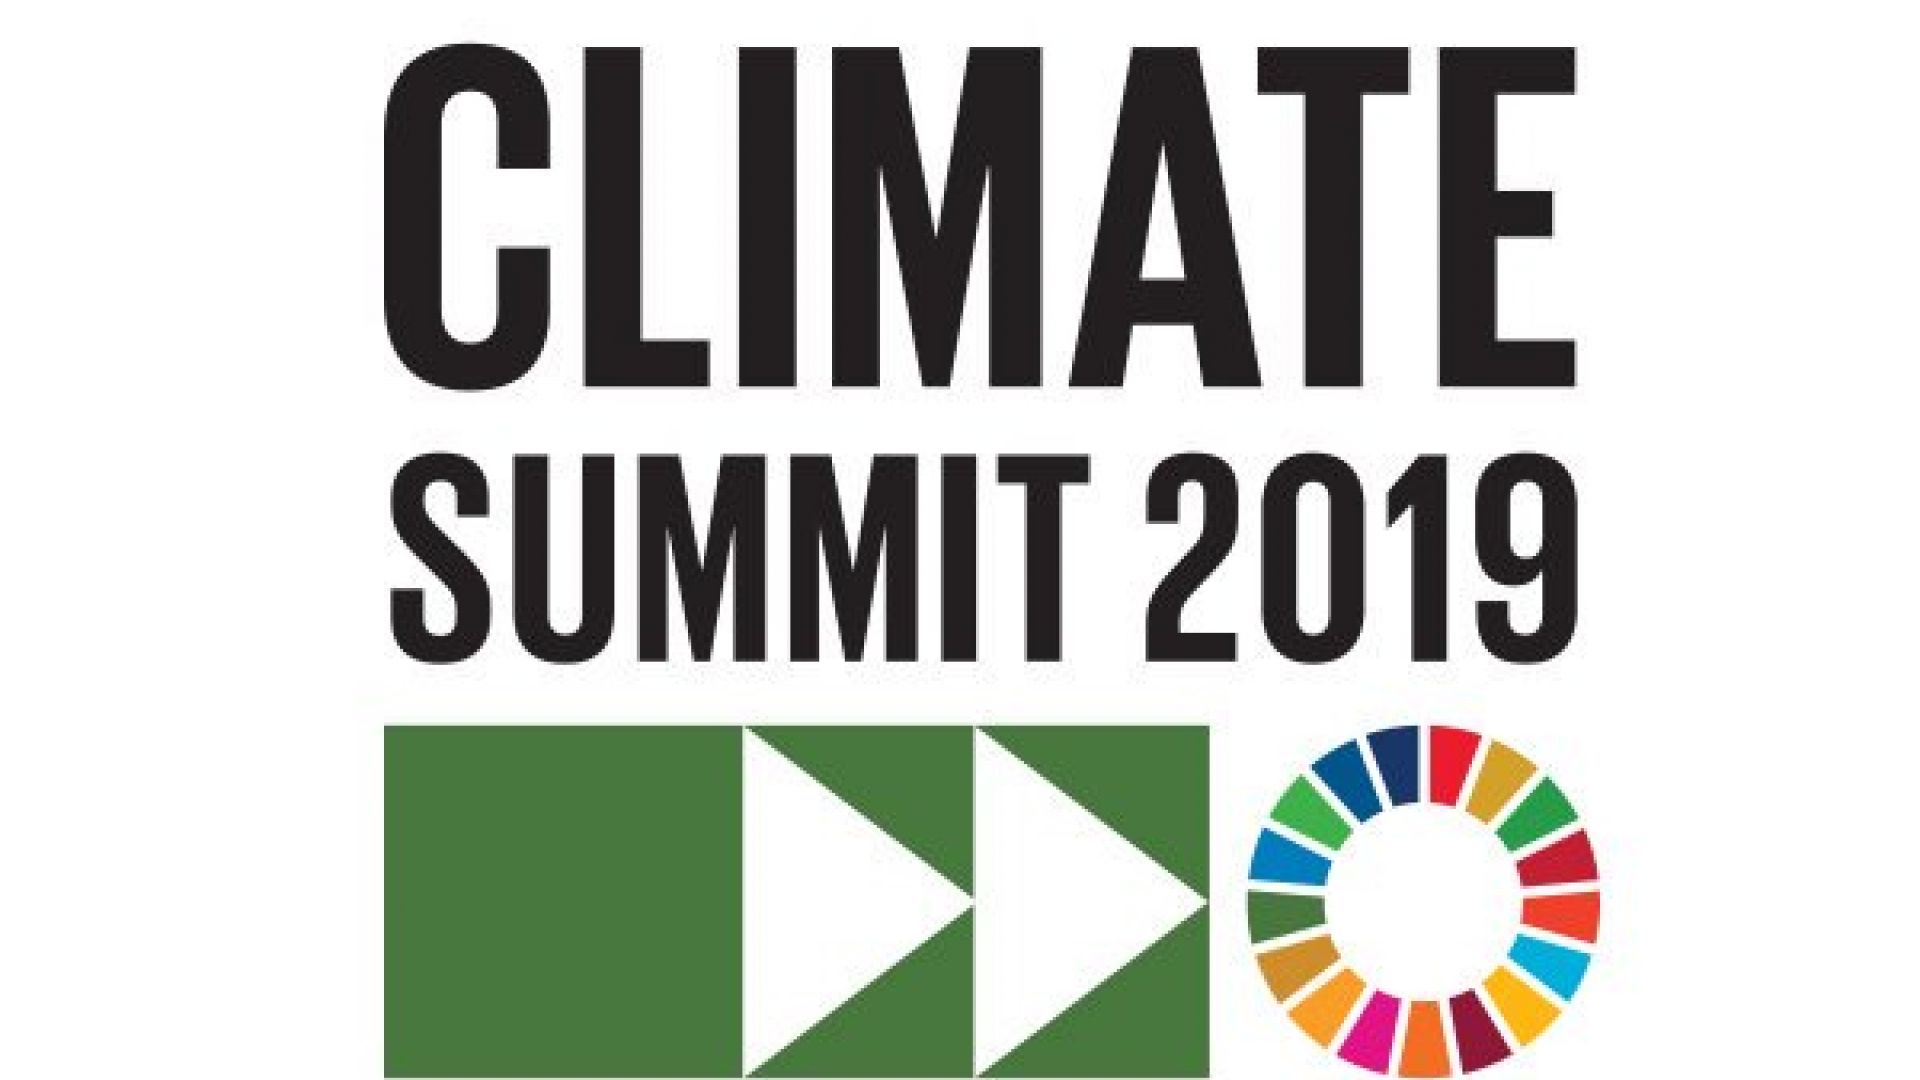 climate summit logo 2019